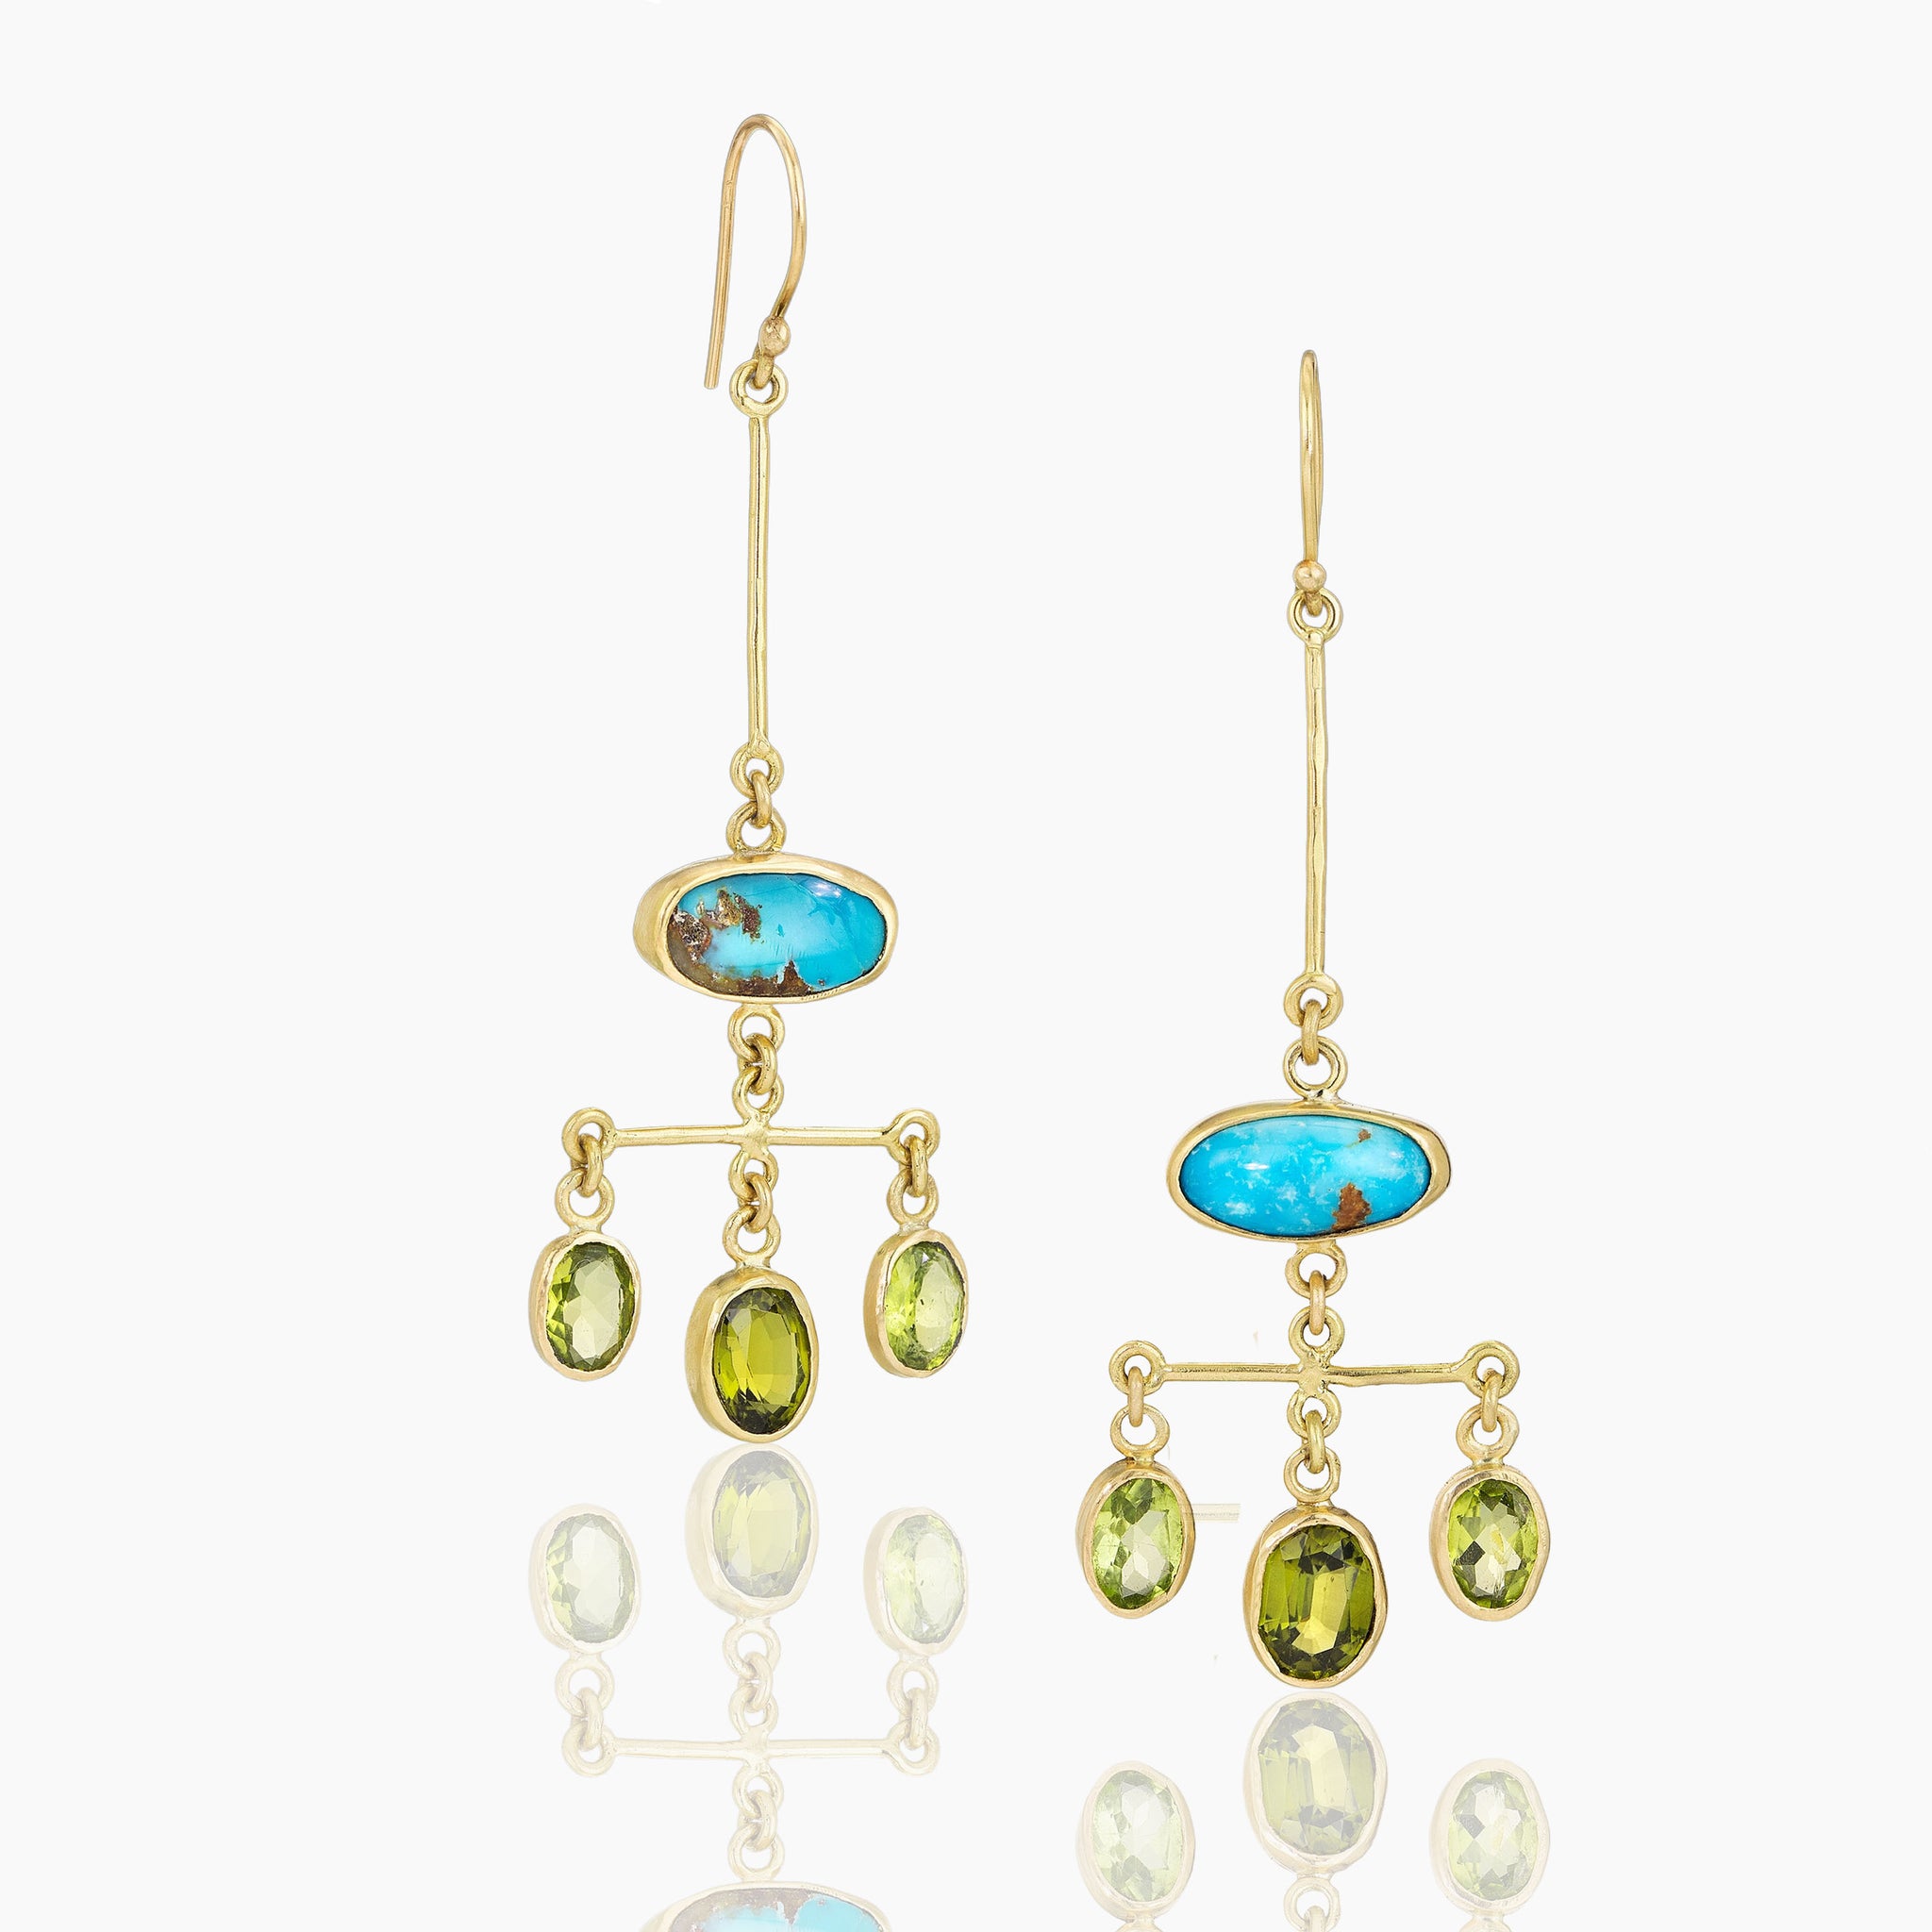 Chandelier Earring with Turquoise and Peridot – Lori Kaplan